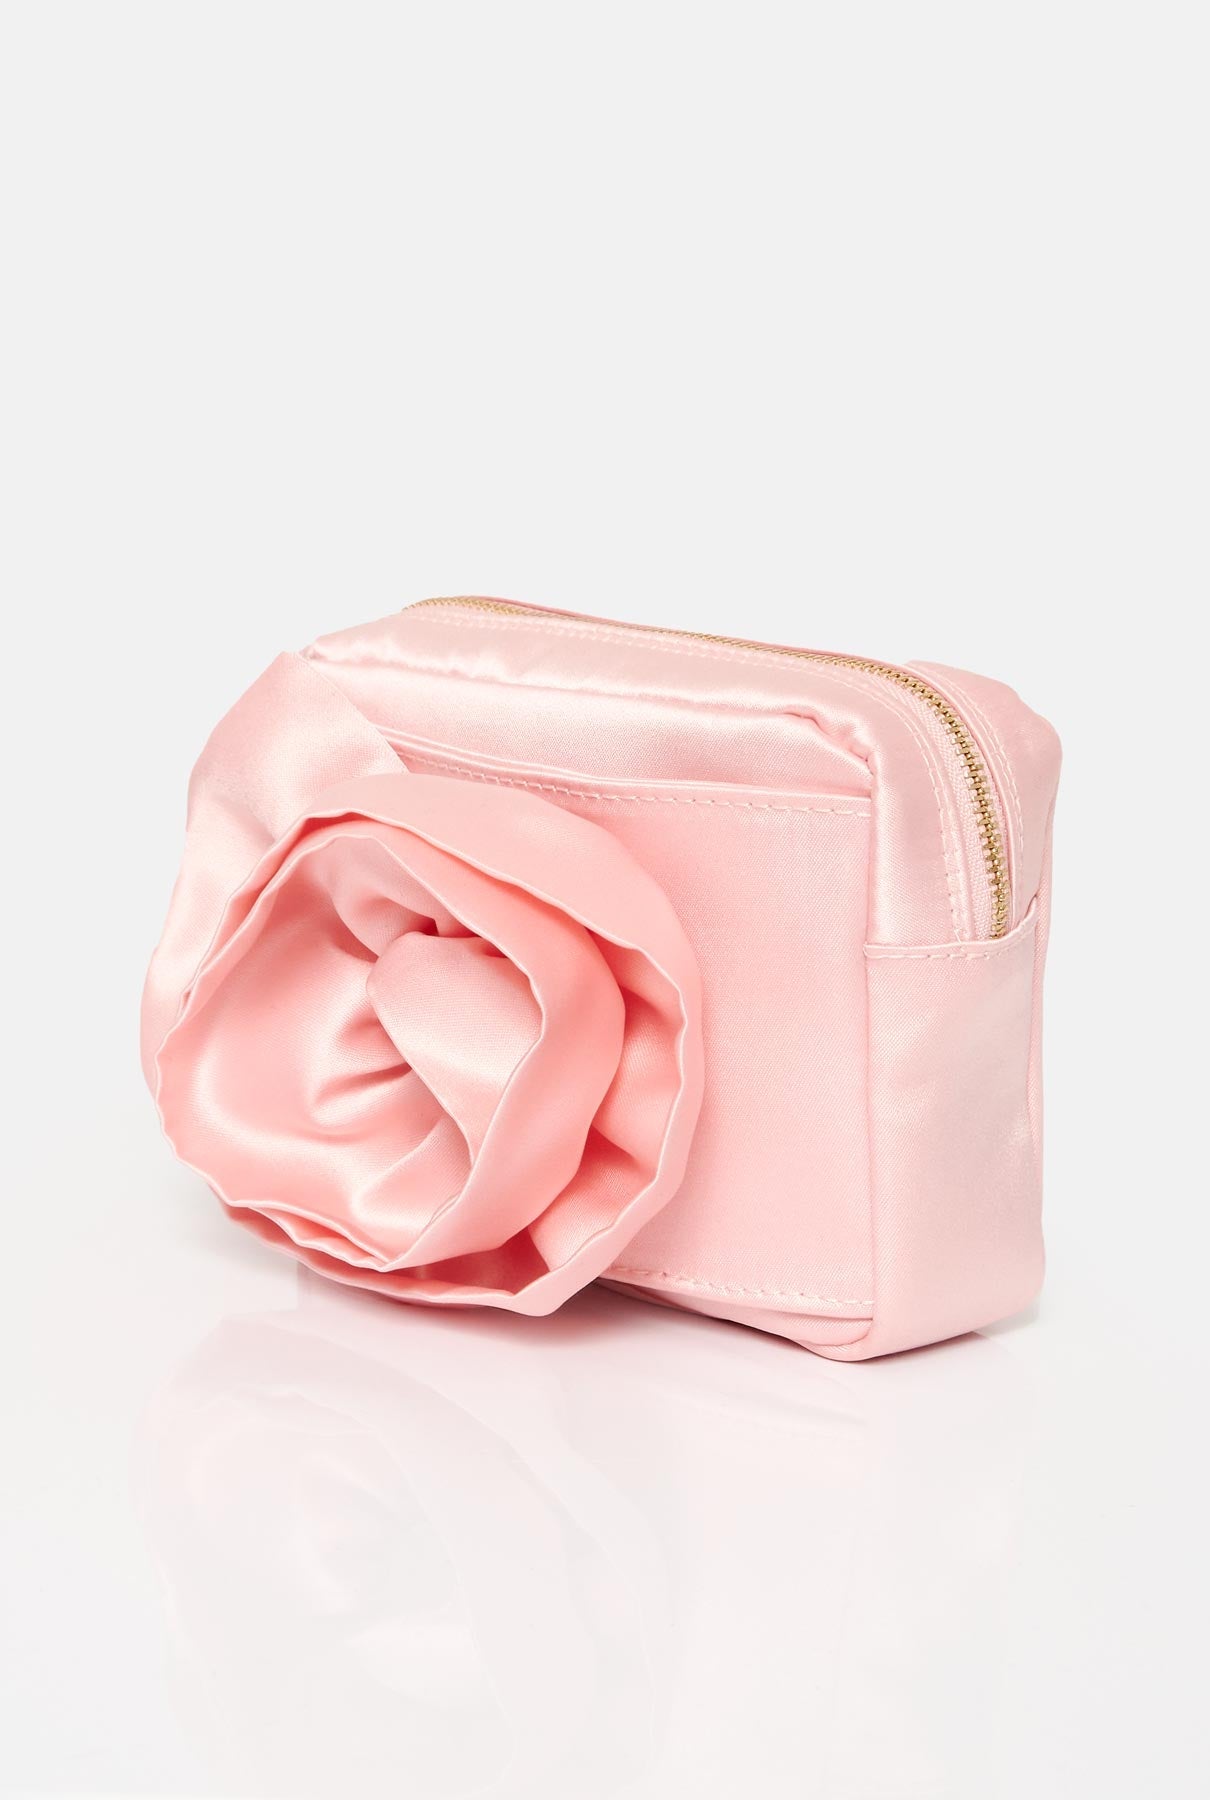 Pulseta bag Rose Pale Hand bags Celina Martin 